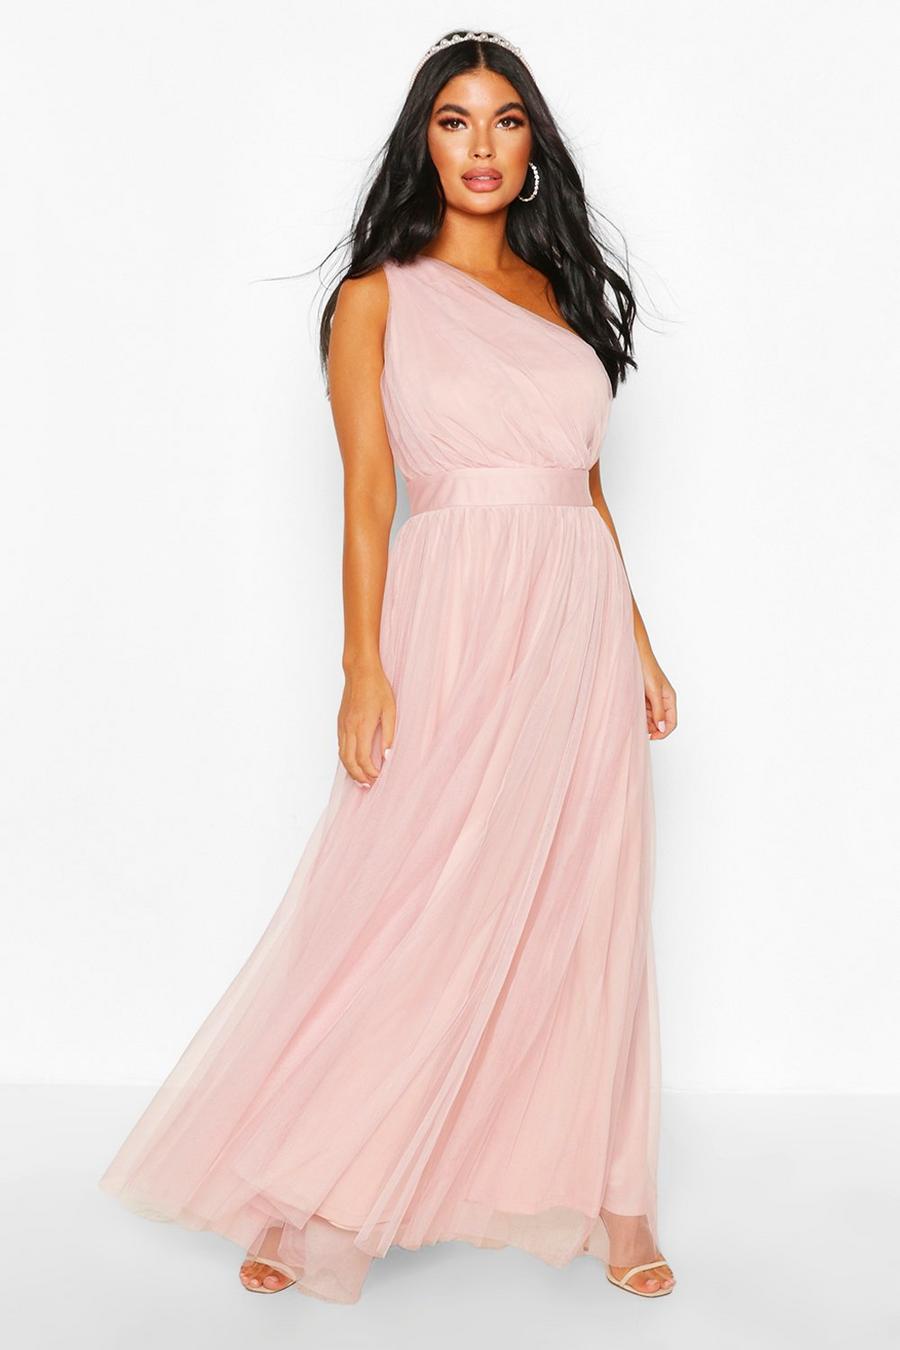 Blush pink Petite Premium Chiffon One Shoulder Maxi Dress